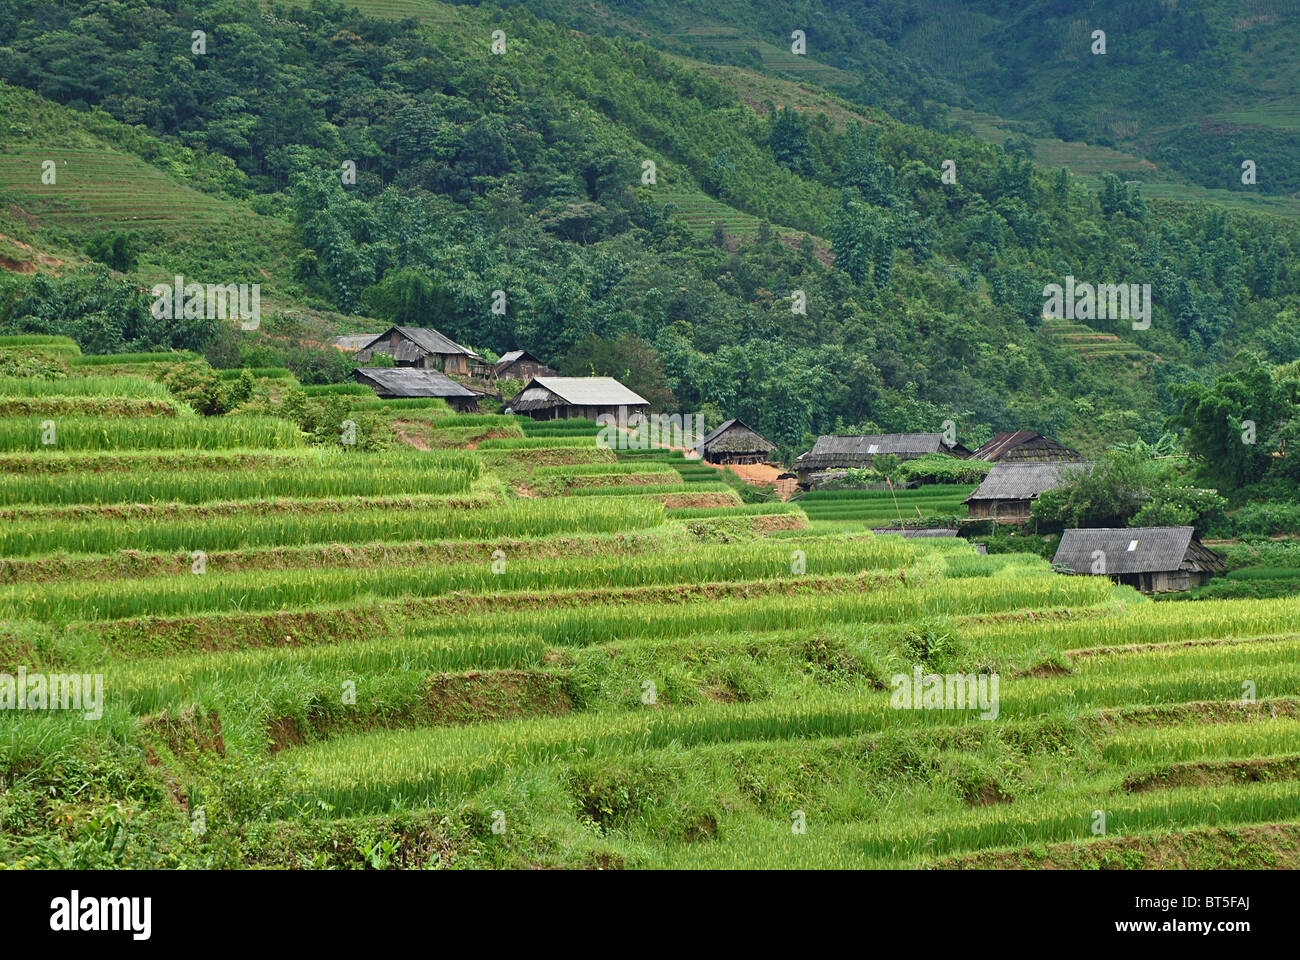 Rural village and terraced rice paddies near Sapa, Vietnam Stock Photo